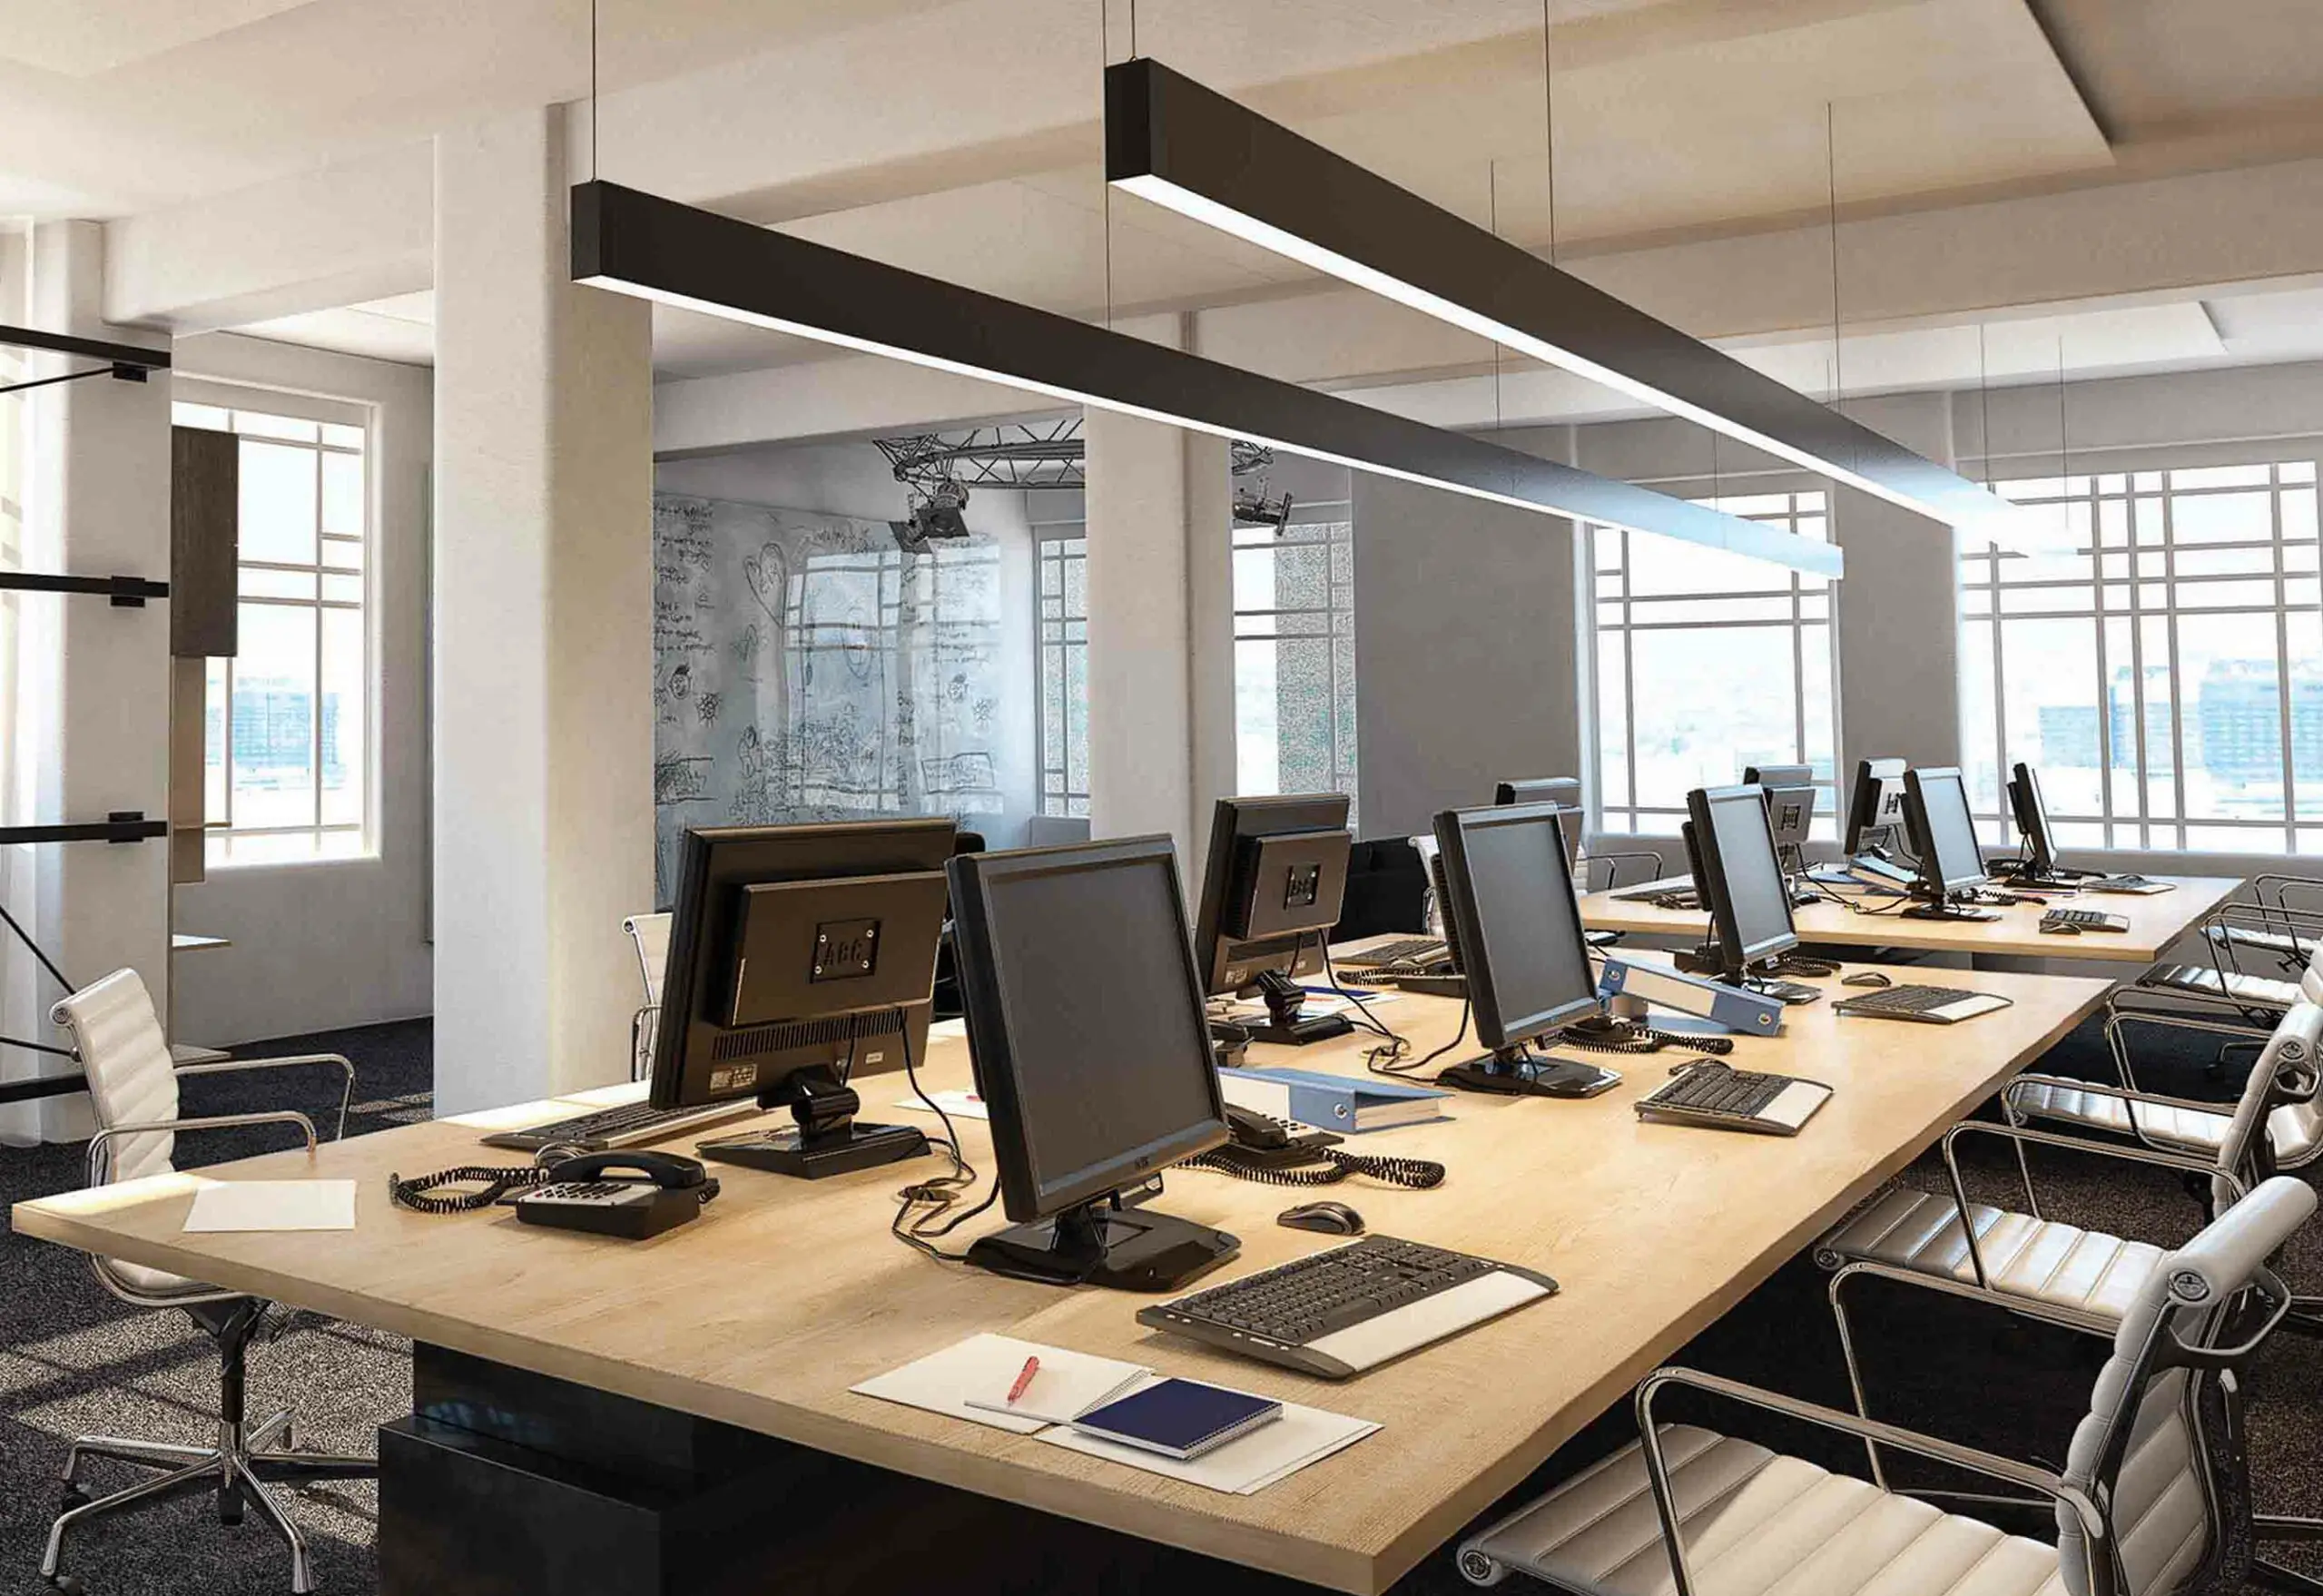 office lighting UAE project linear lighting - smart office lighting - office lighting automation